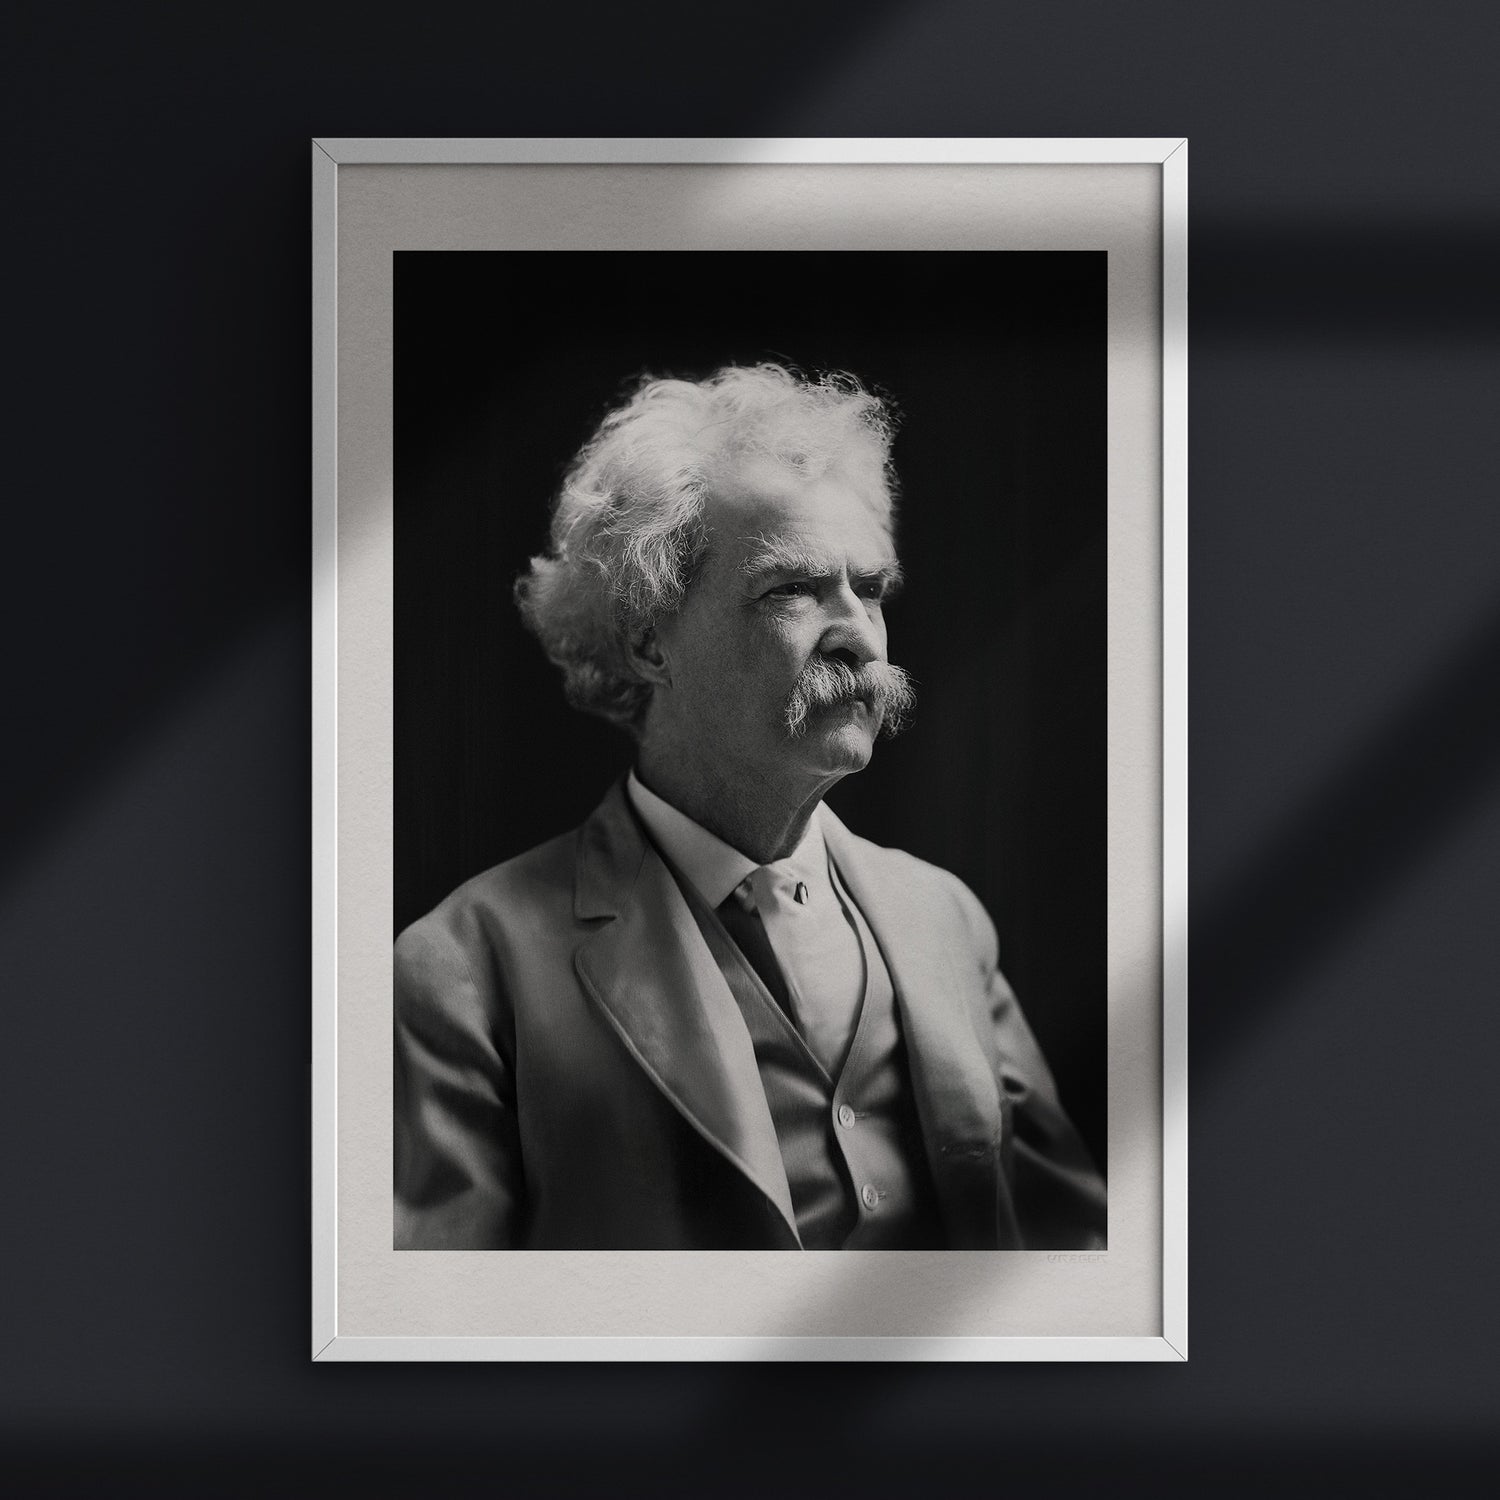 Mark Twain by Jordan A.F. Bradley, 1906